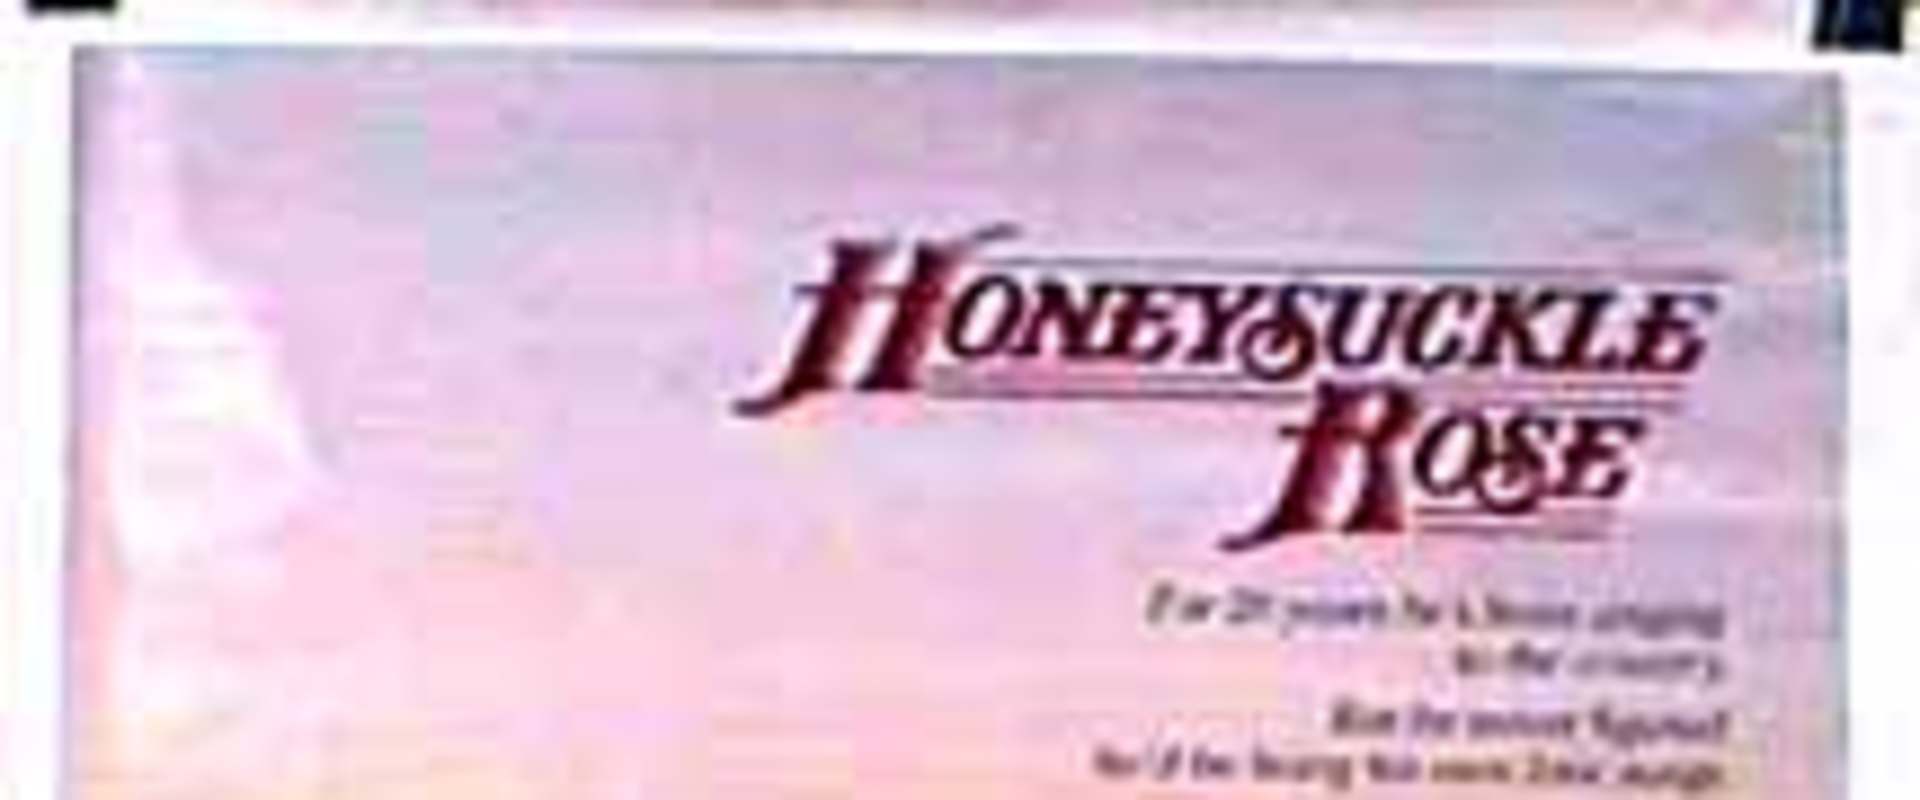 Honeysuckle Rose background 1